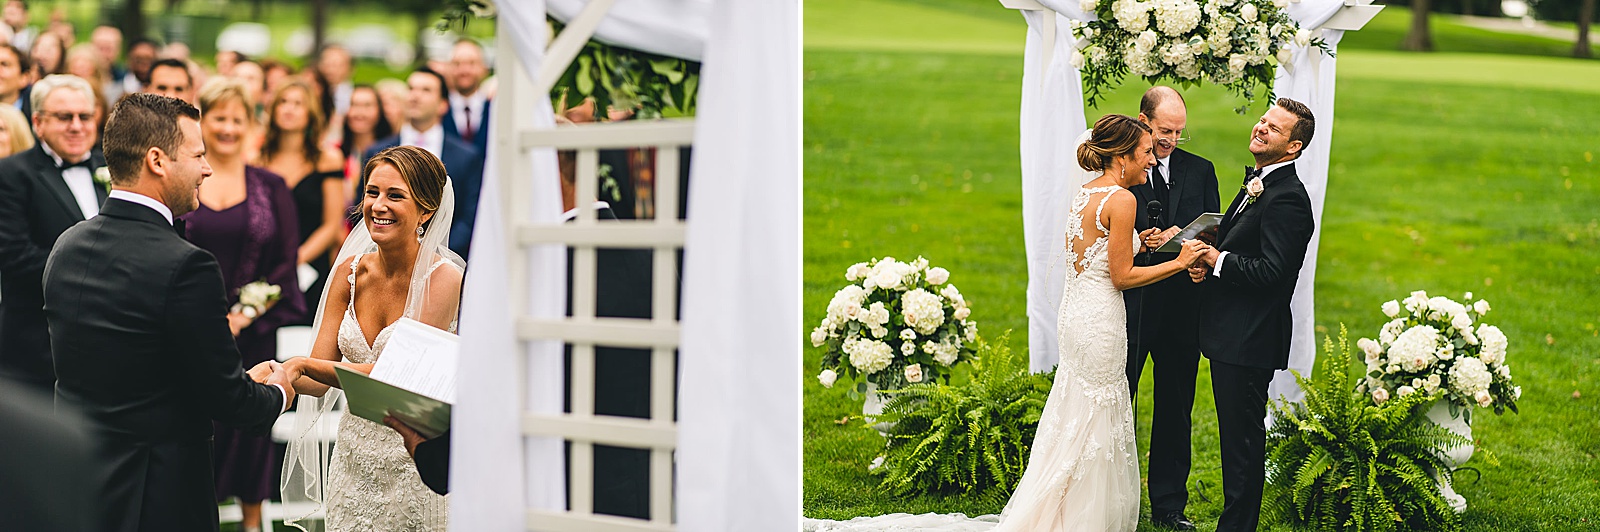 38 medinah wedding photography outdoors